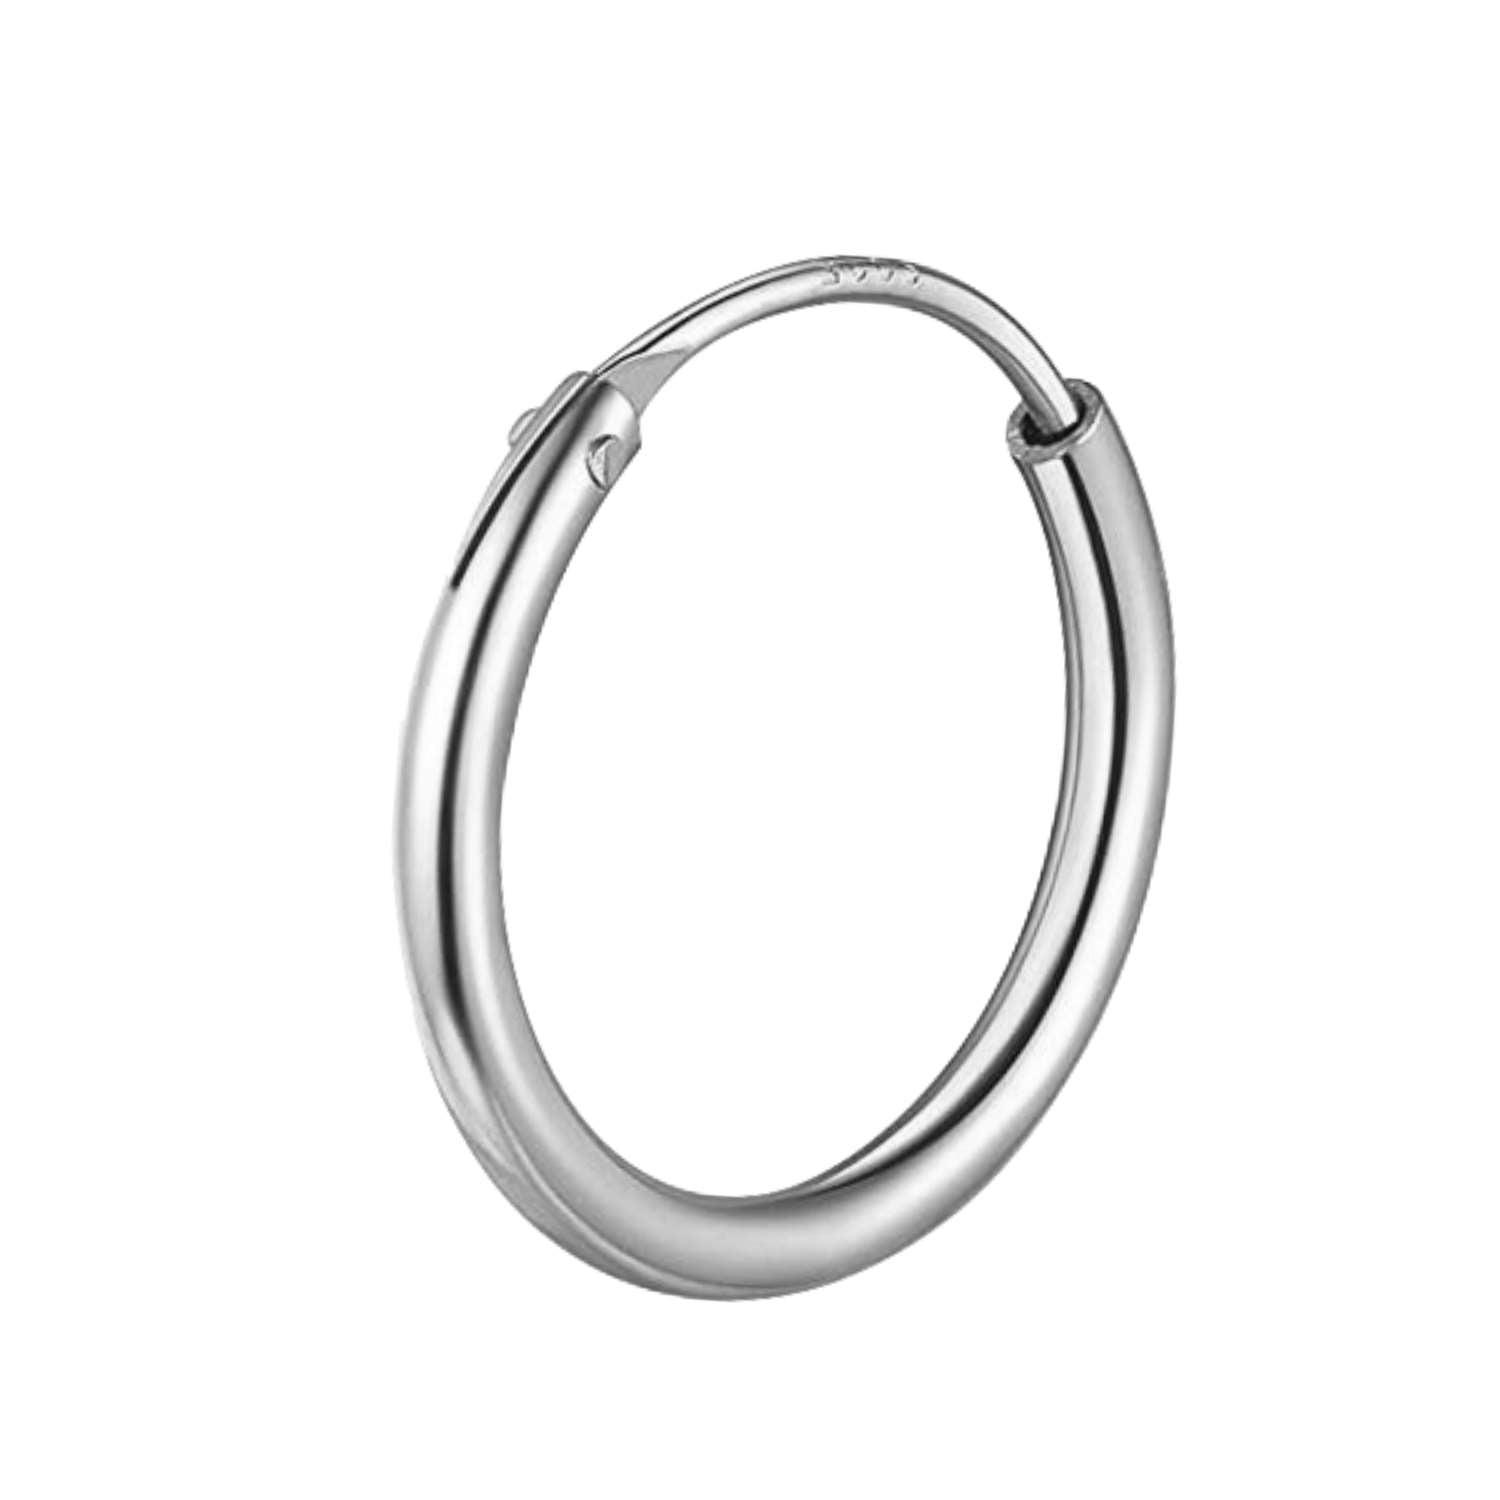 Medical-Grade Titanium Silver Safety Hoop Earrings